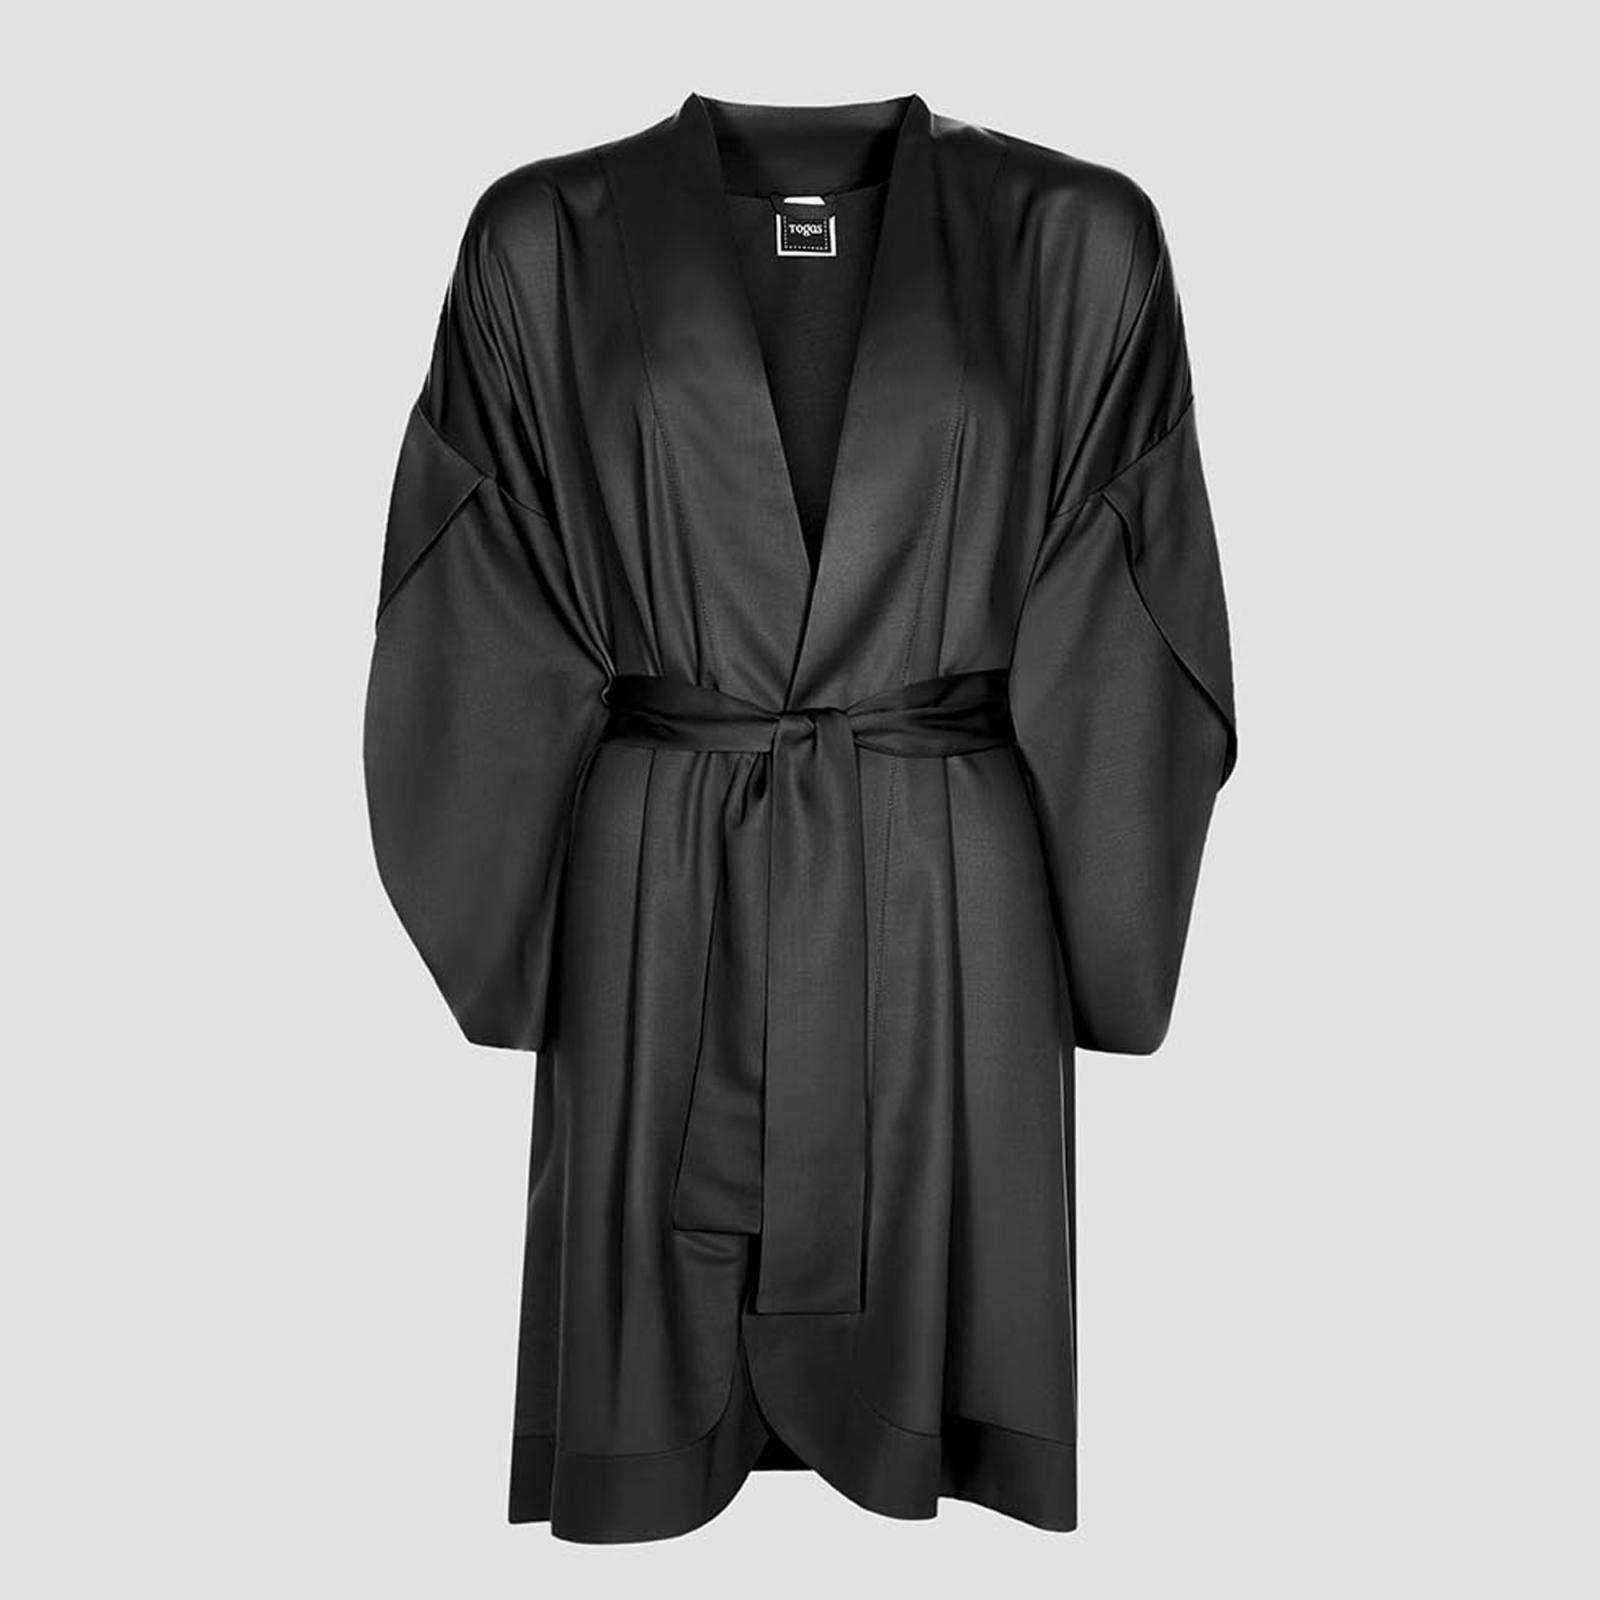 Халат-кимоно короткое Togas Наоми чёрное М (46) халат кимоно короткое togas наоми чёрное м 46